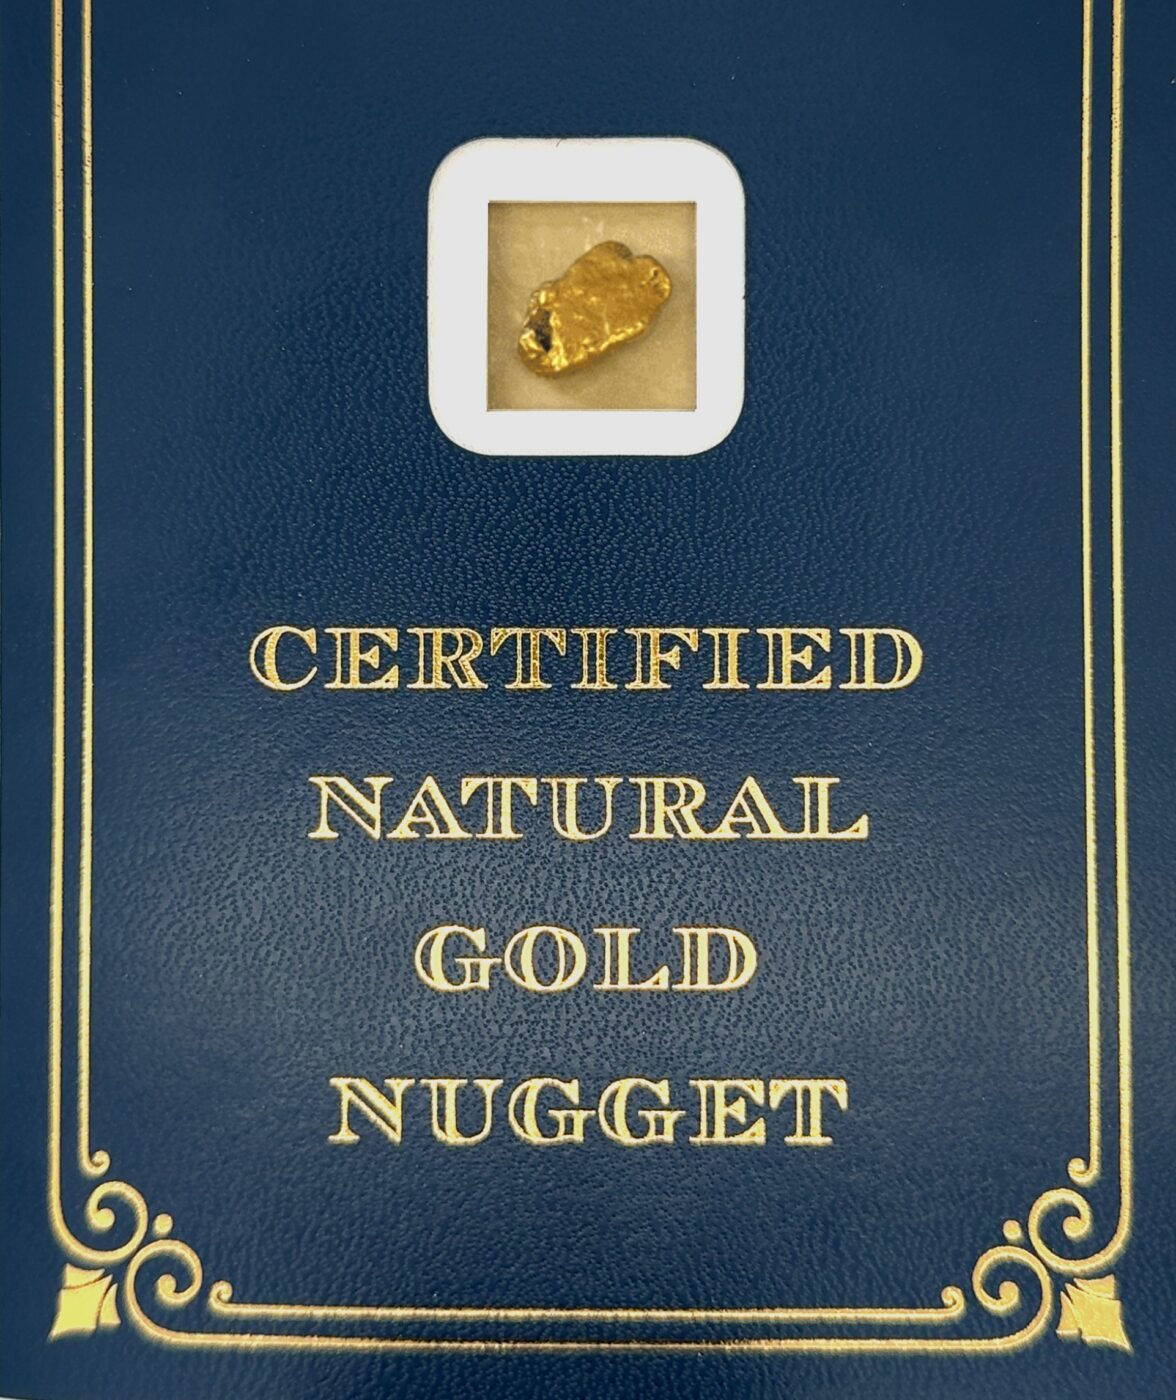 4.3 Gram Natural Gold Nugget from Trapper Creek Alaska, Alaska Mint